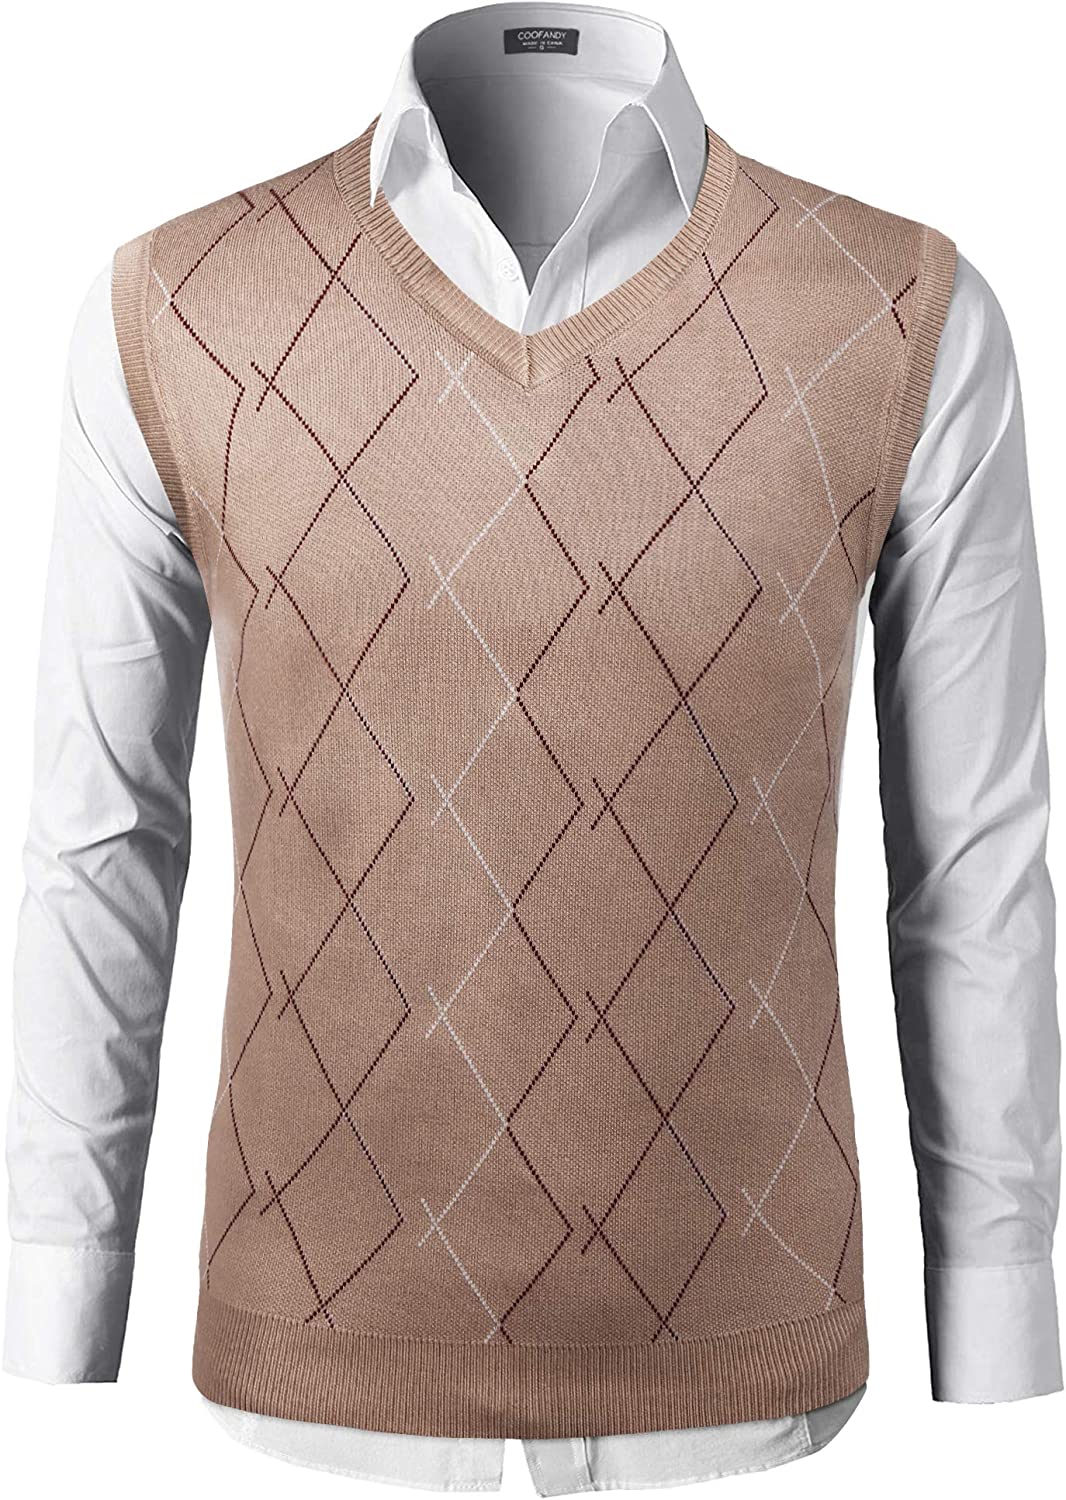 COOFANDY Men's Casual Slim Fit V Neck Knit Sweater Vest Sleeveless ...